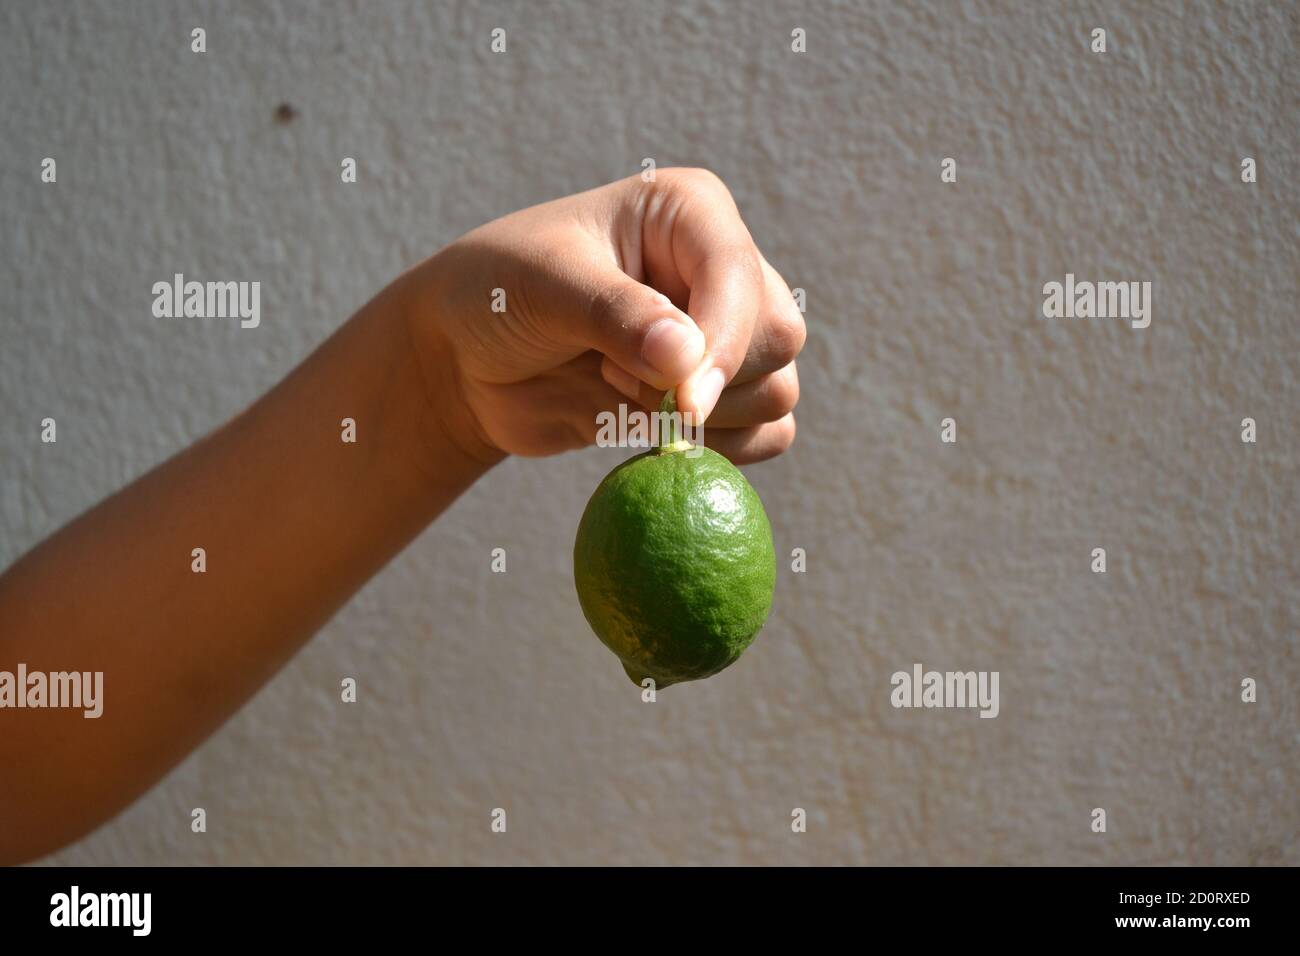 Green lemon in human hand. Stock Photo